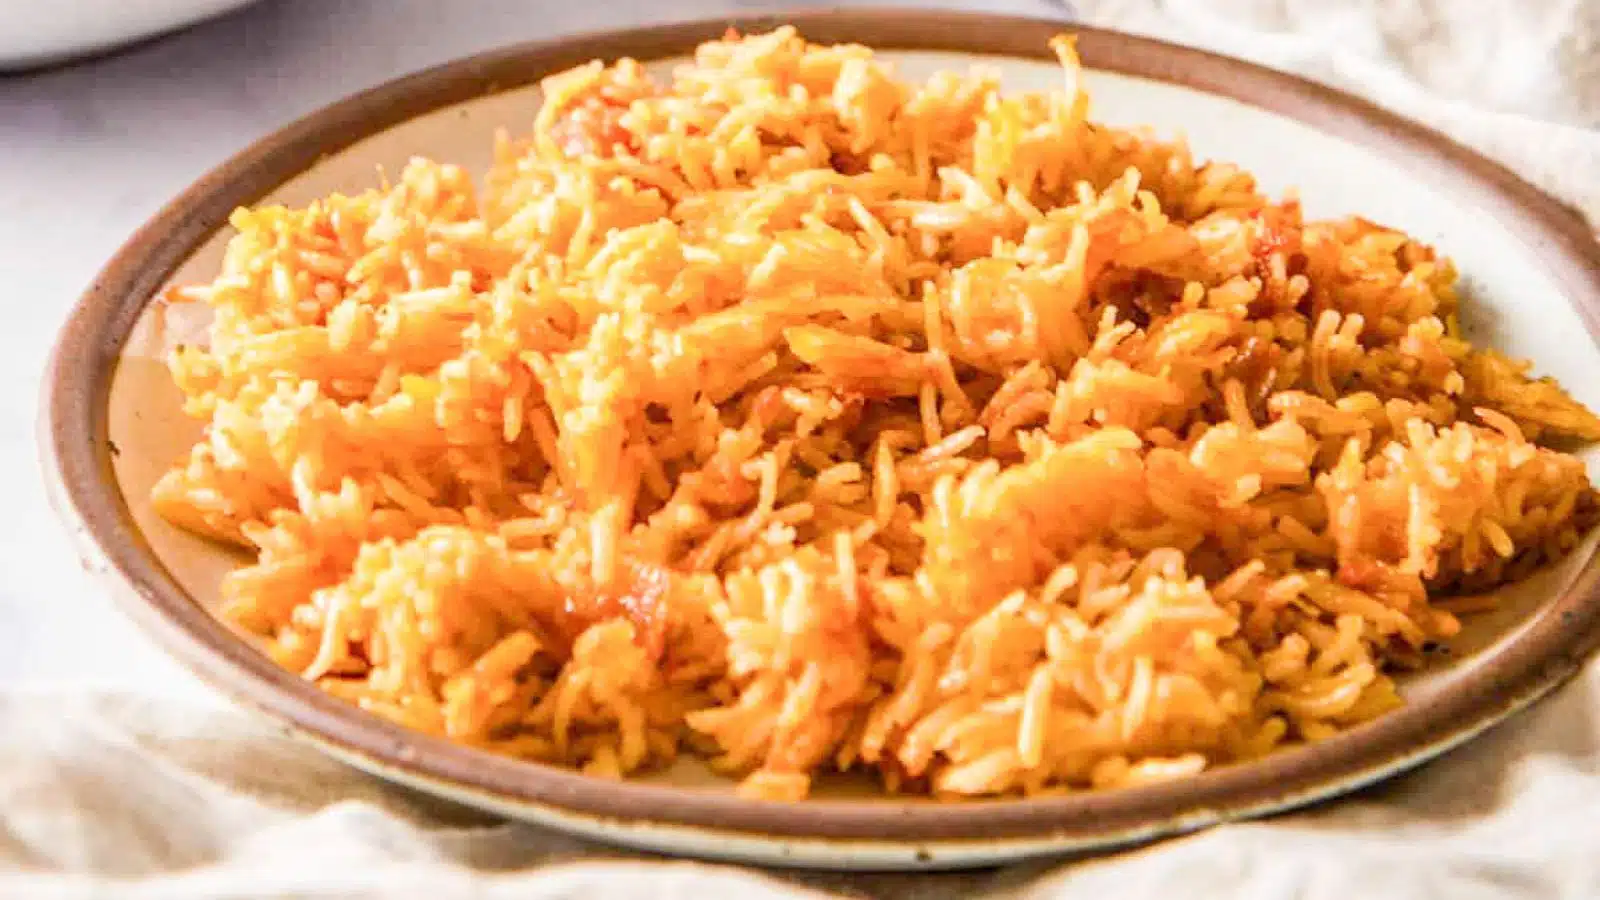 jollof rice on a brown plate